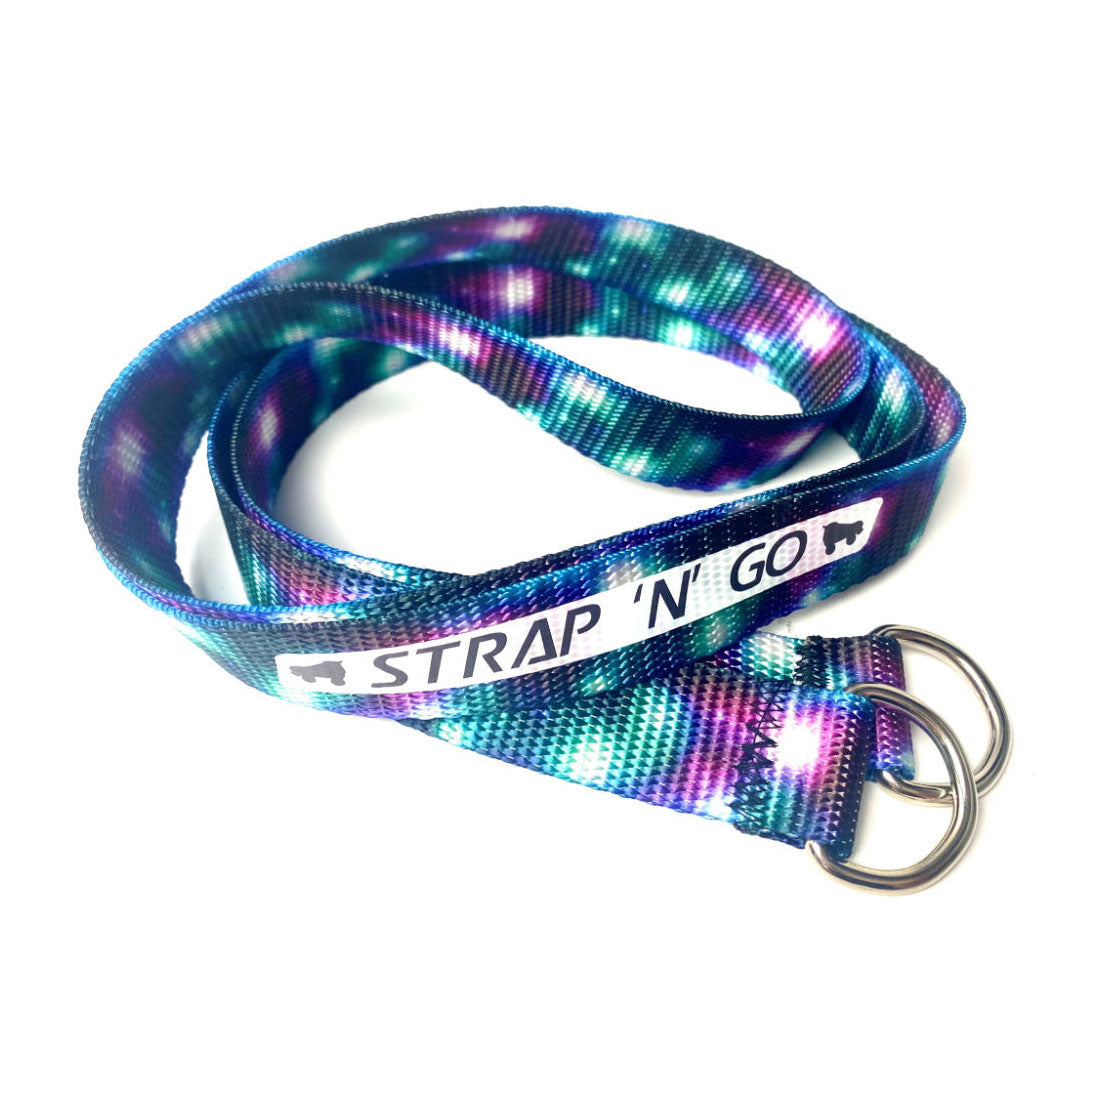 Strap N Go Skate Noose/Leash - Patterns Cosmic Ray Roller Skate Accessories